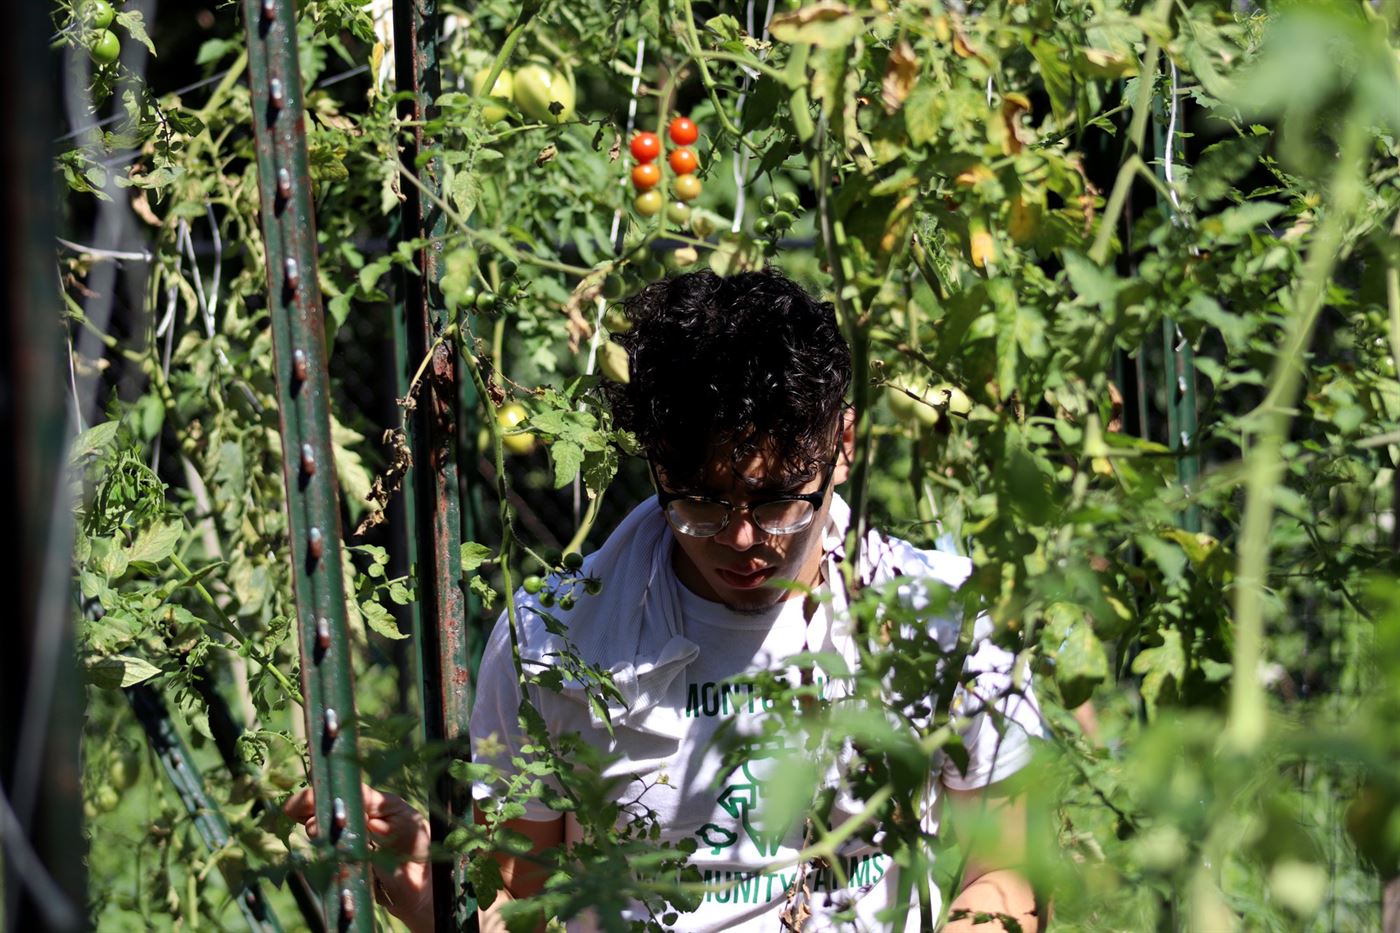 A Montclair Community Farms member helping pick tomatoes. John LaRosa | The Montclarion